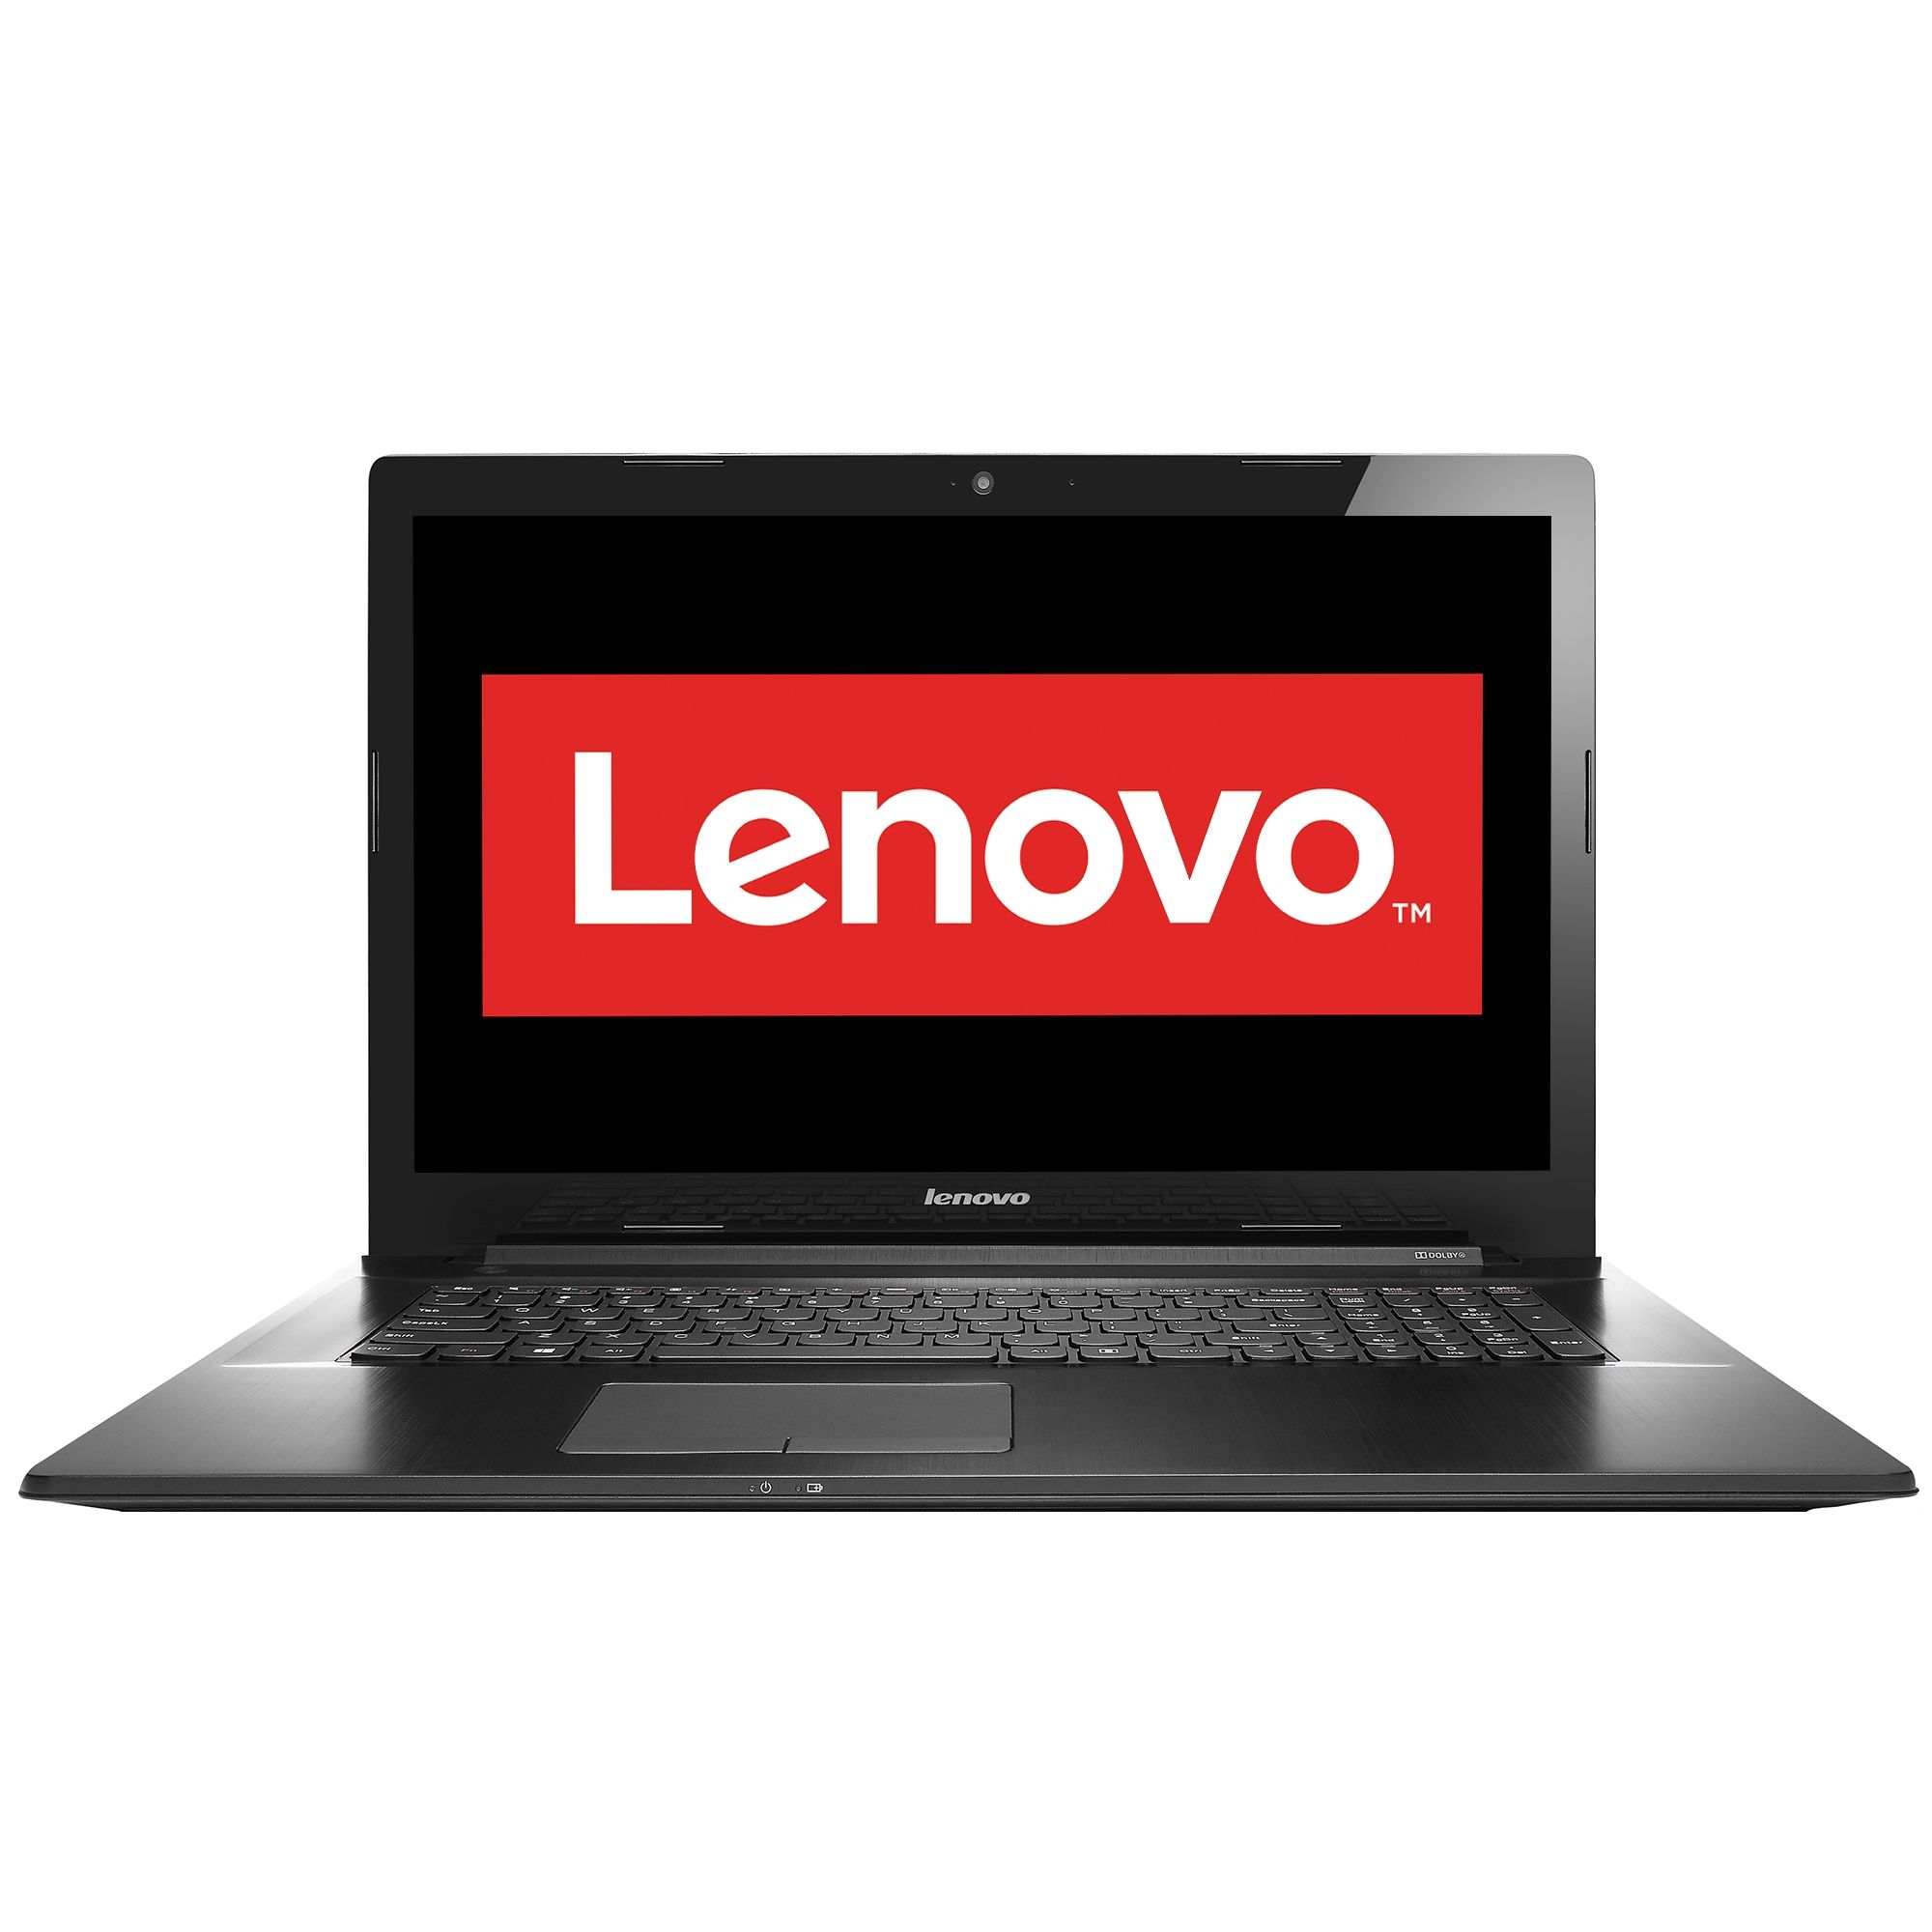  Laptop Lenovo G70-80, Intel Core i7-5500U, 8GB DDR3, HDD 1TB, nVidia GeForce 920M 2GB, Free DOS 